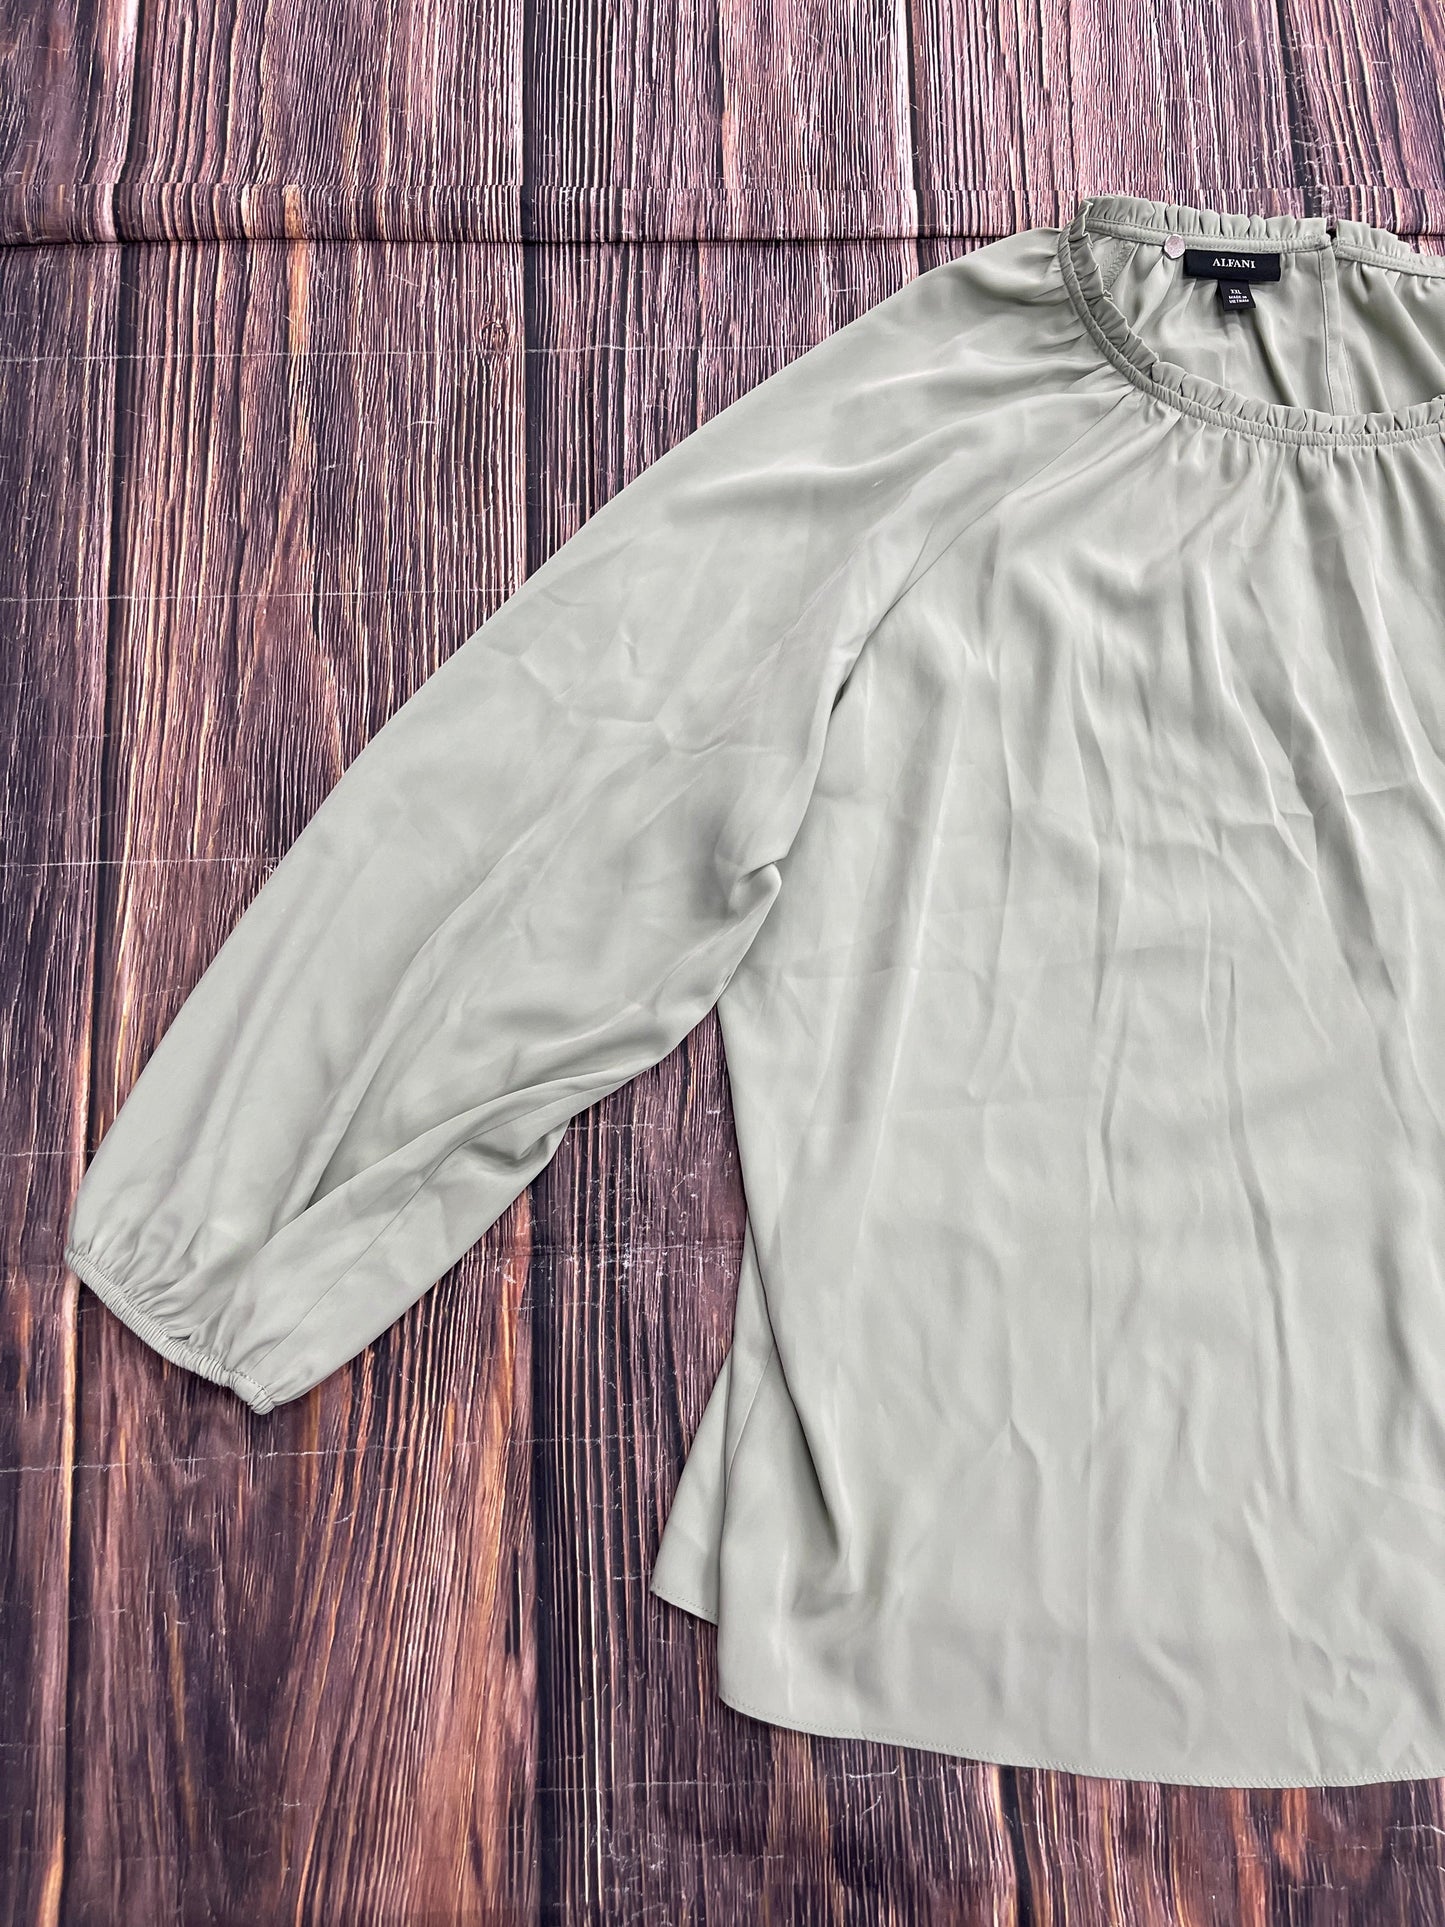 Blouse Long Sleeve By Alfani  Size: 1x